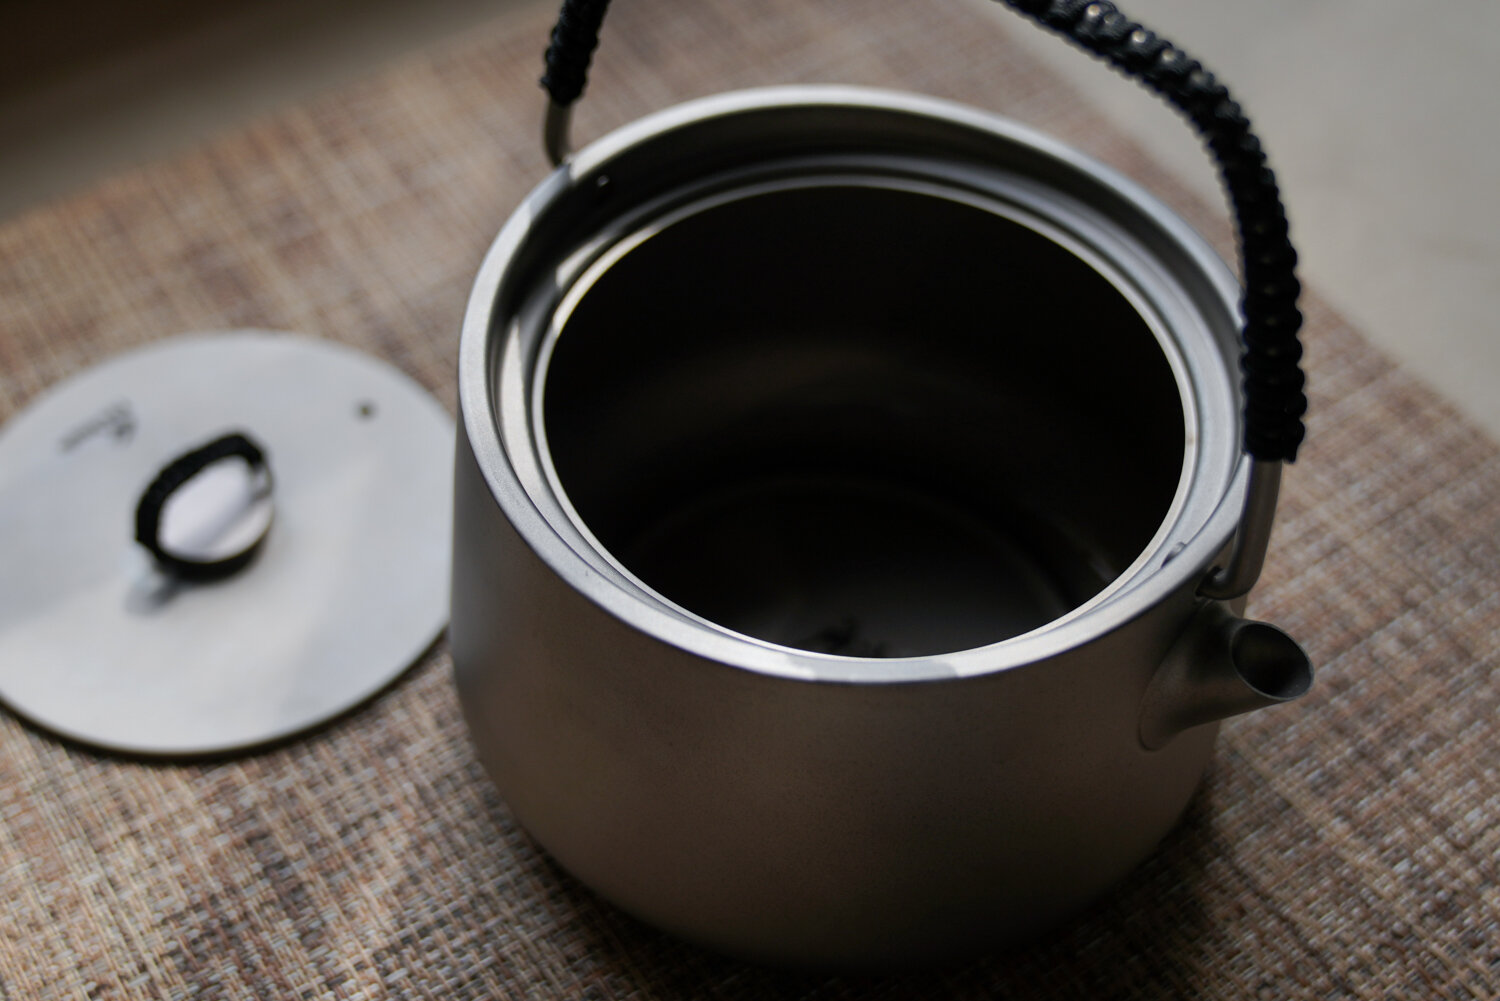 Titanium Kettle Outdoor Tea Coffee Kettle Tableware Pot Camping